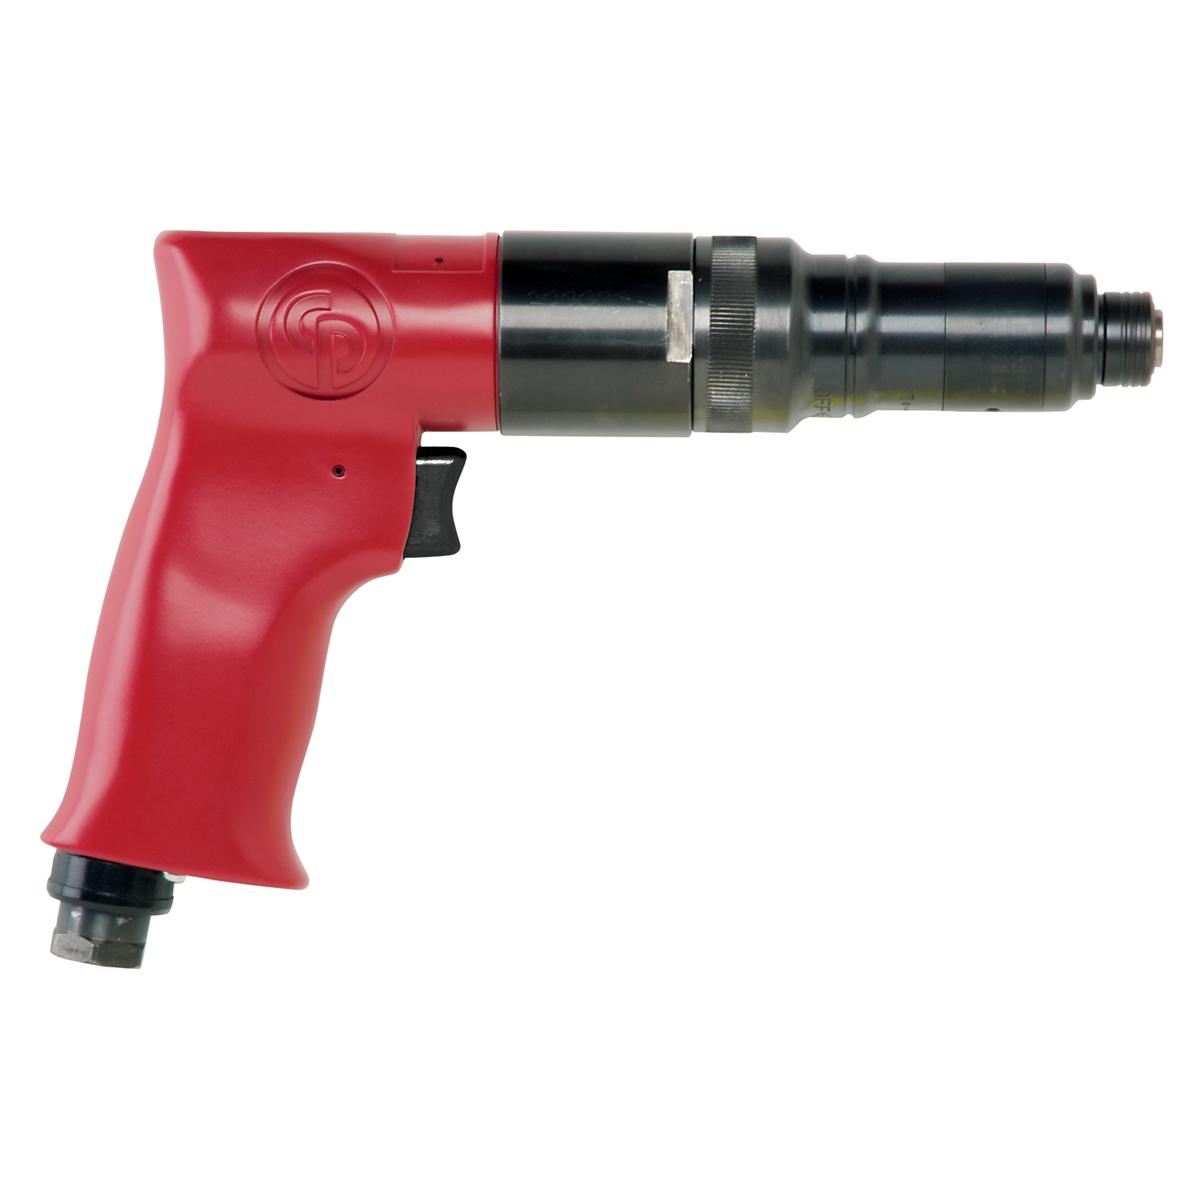 Screwdriver CP781 - 1/4 In Reversible Gun Style - 800 RPM